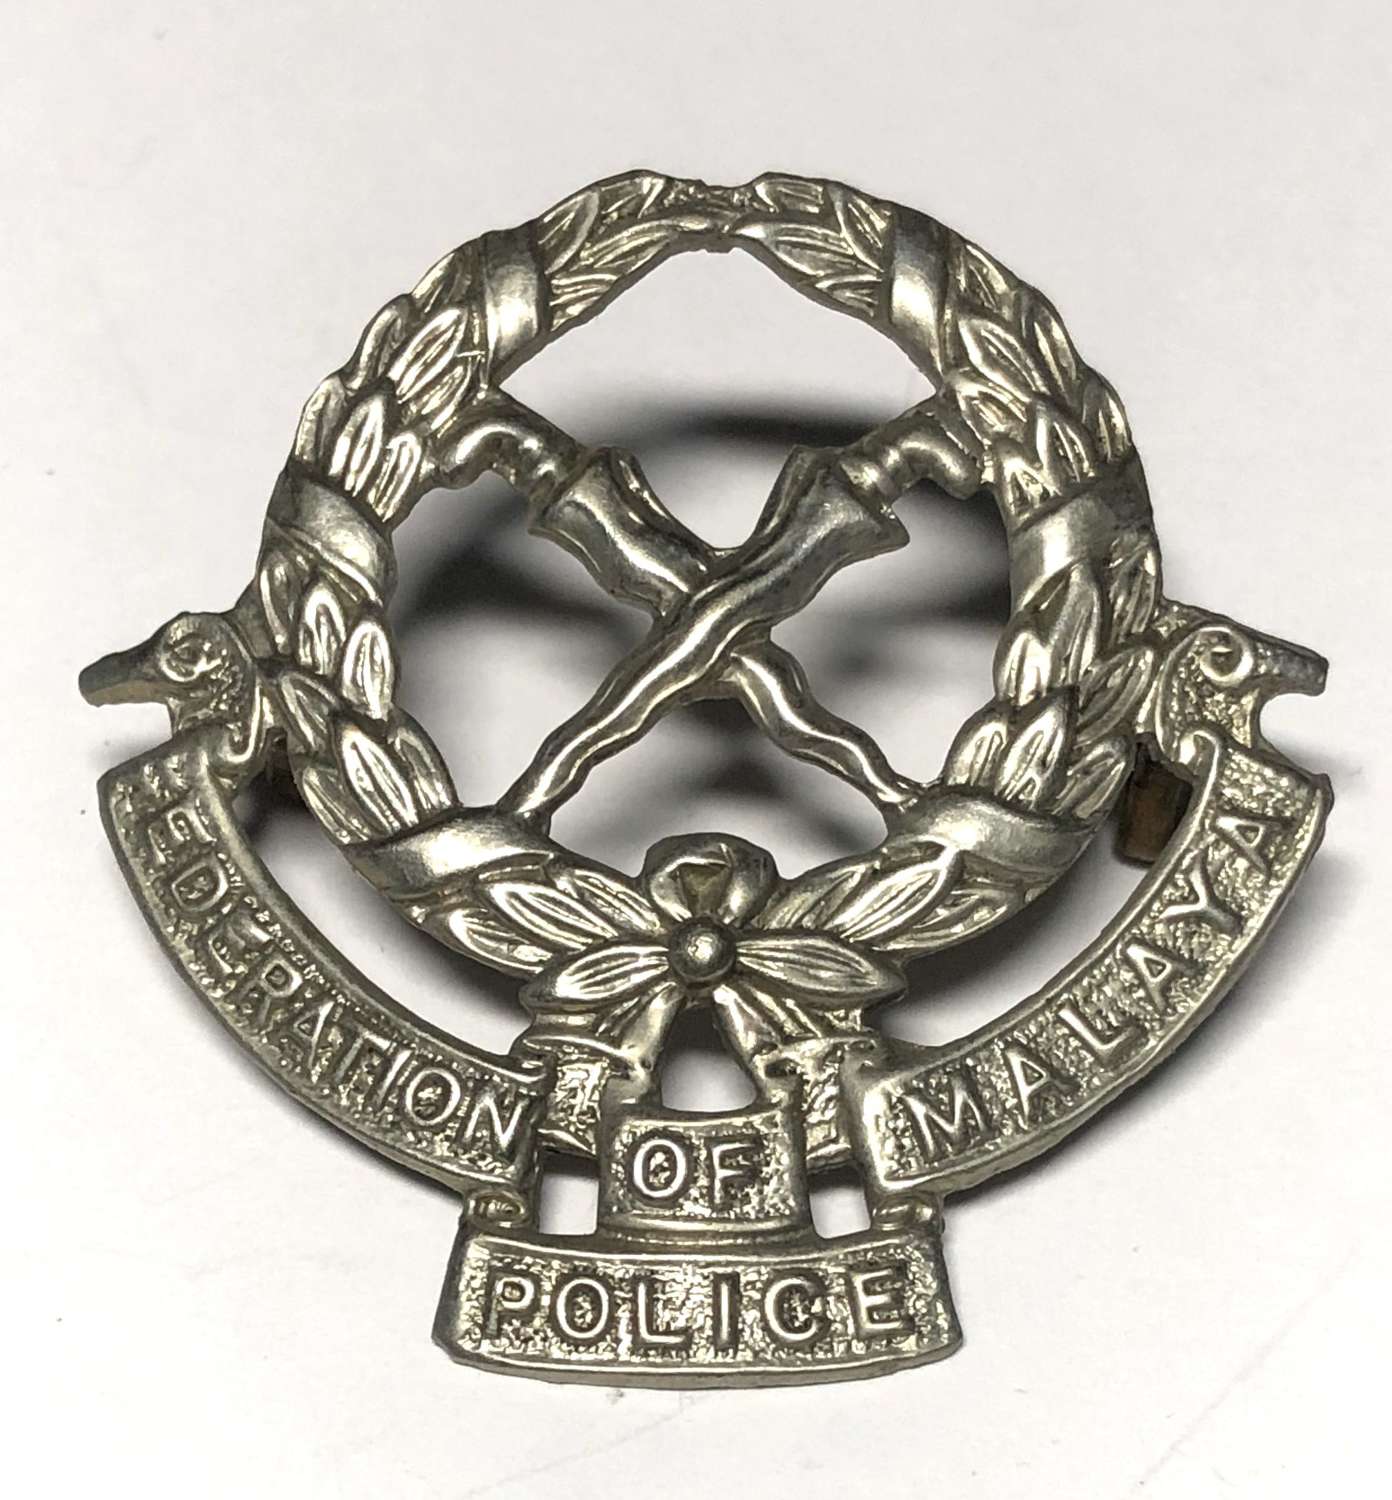 Federation of Malaya Police cap badge